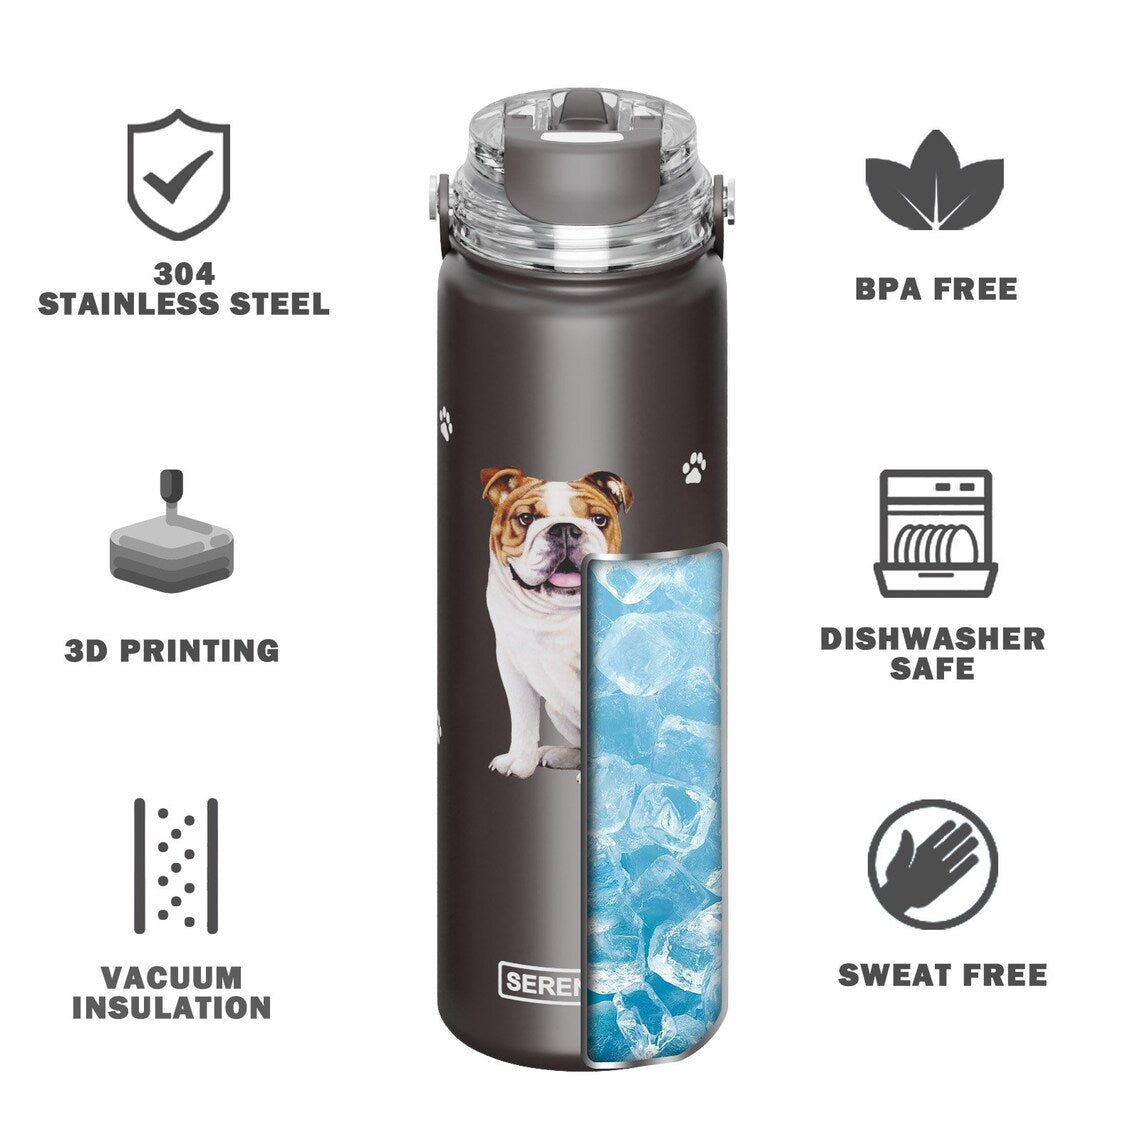 SERENGETI Stainless Steel Water Bottle 24oz - French Bulldog